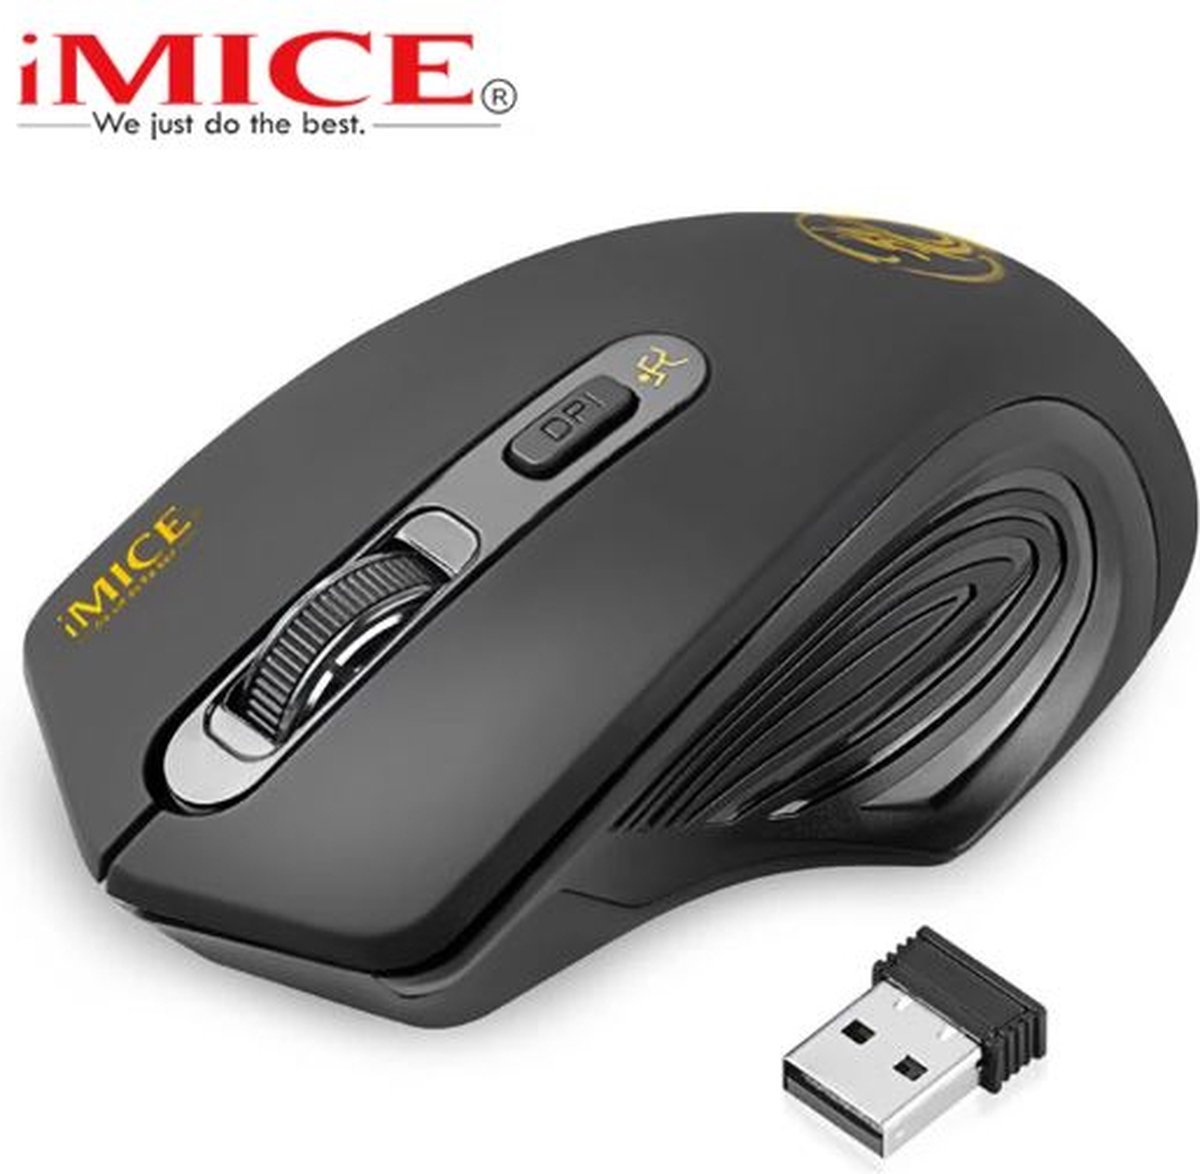 iMice - Draadloze Muis - Stil - Geluidloos - USB - Silent - Draadloze Muis Laptop - DPI Aanpasbaar - Zwart